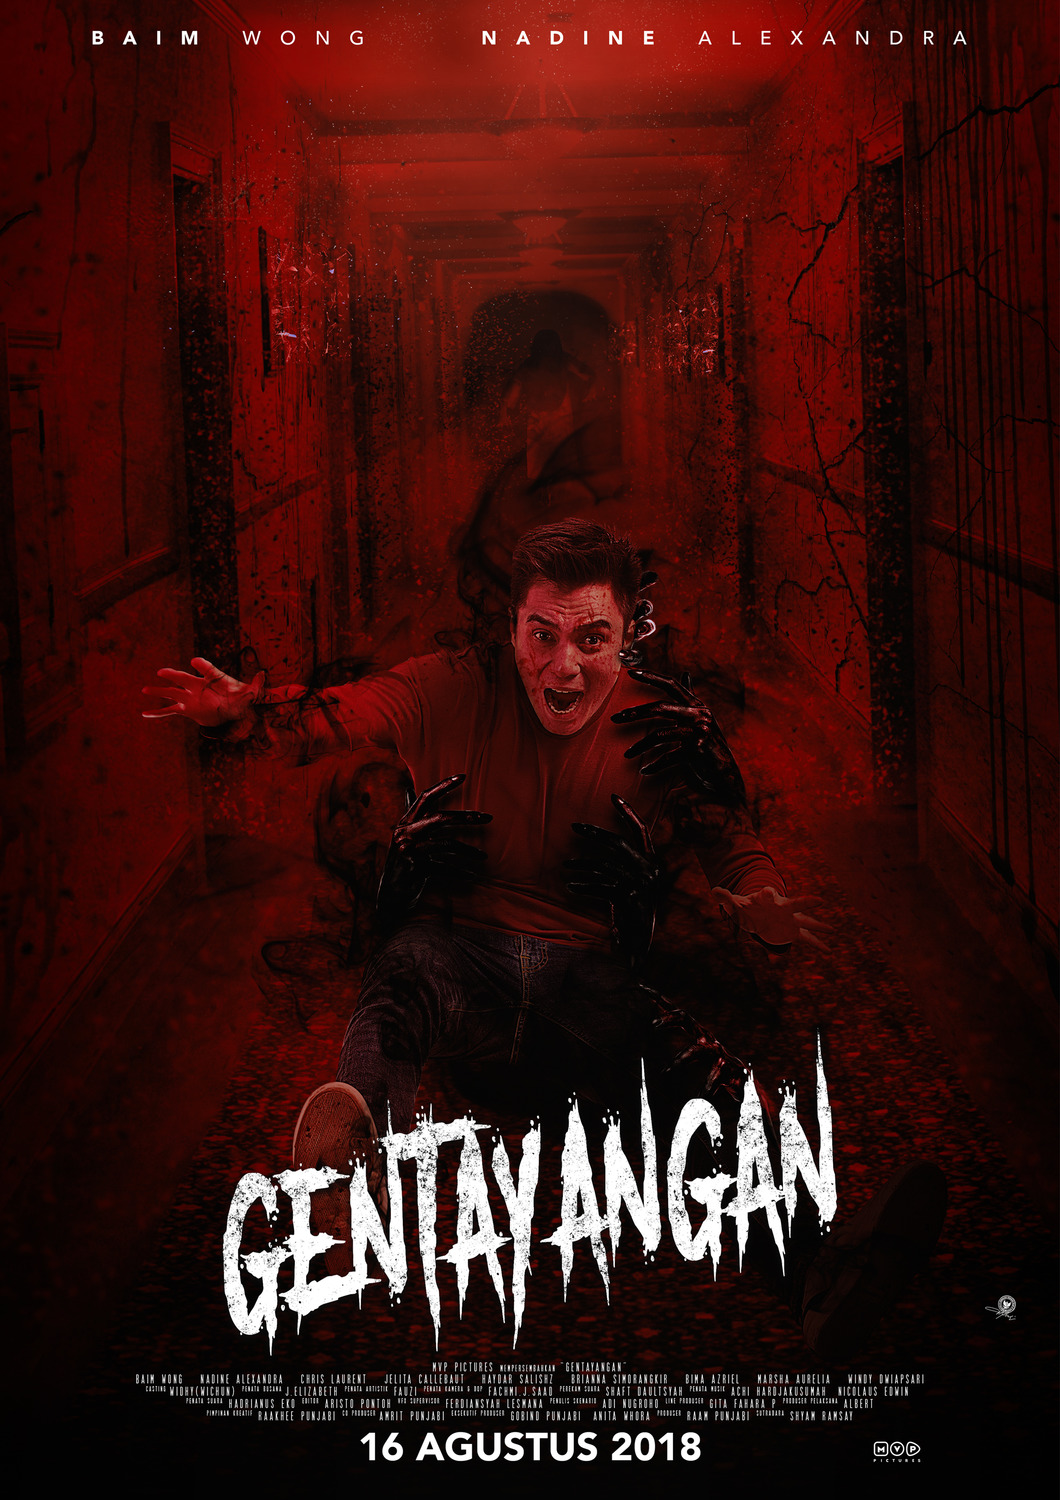 Extra Large Movie Poster Image for Gentayangan 